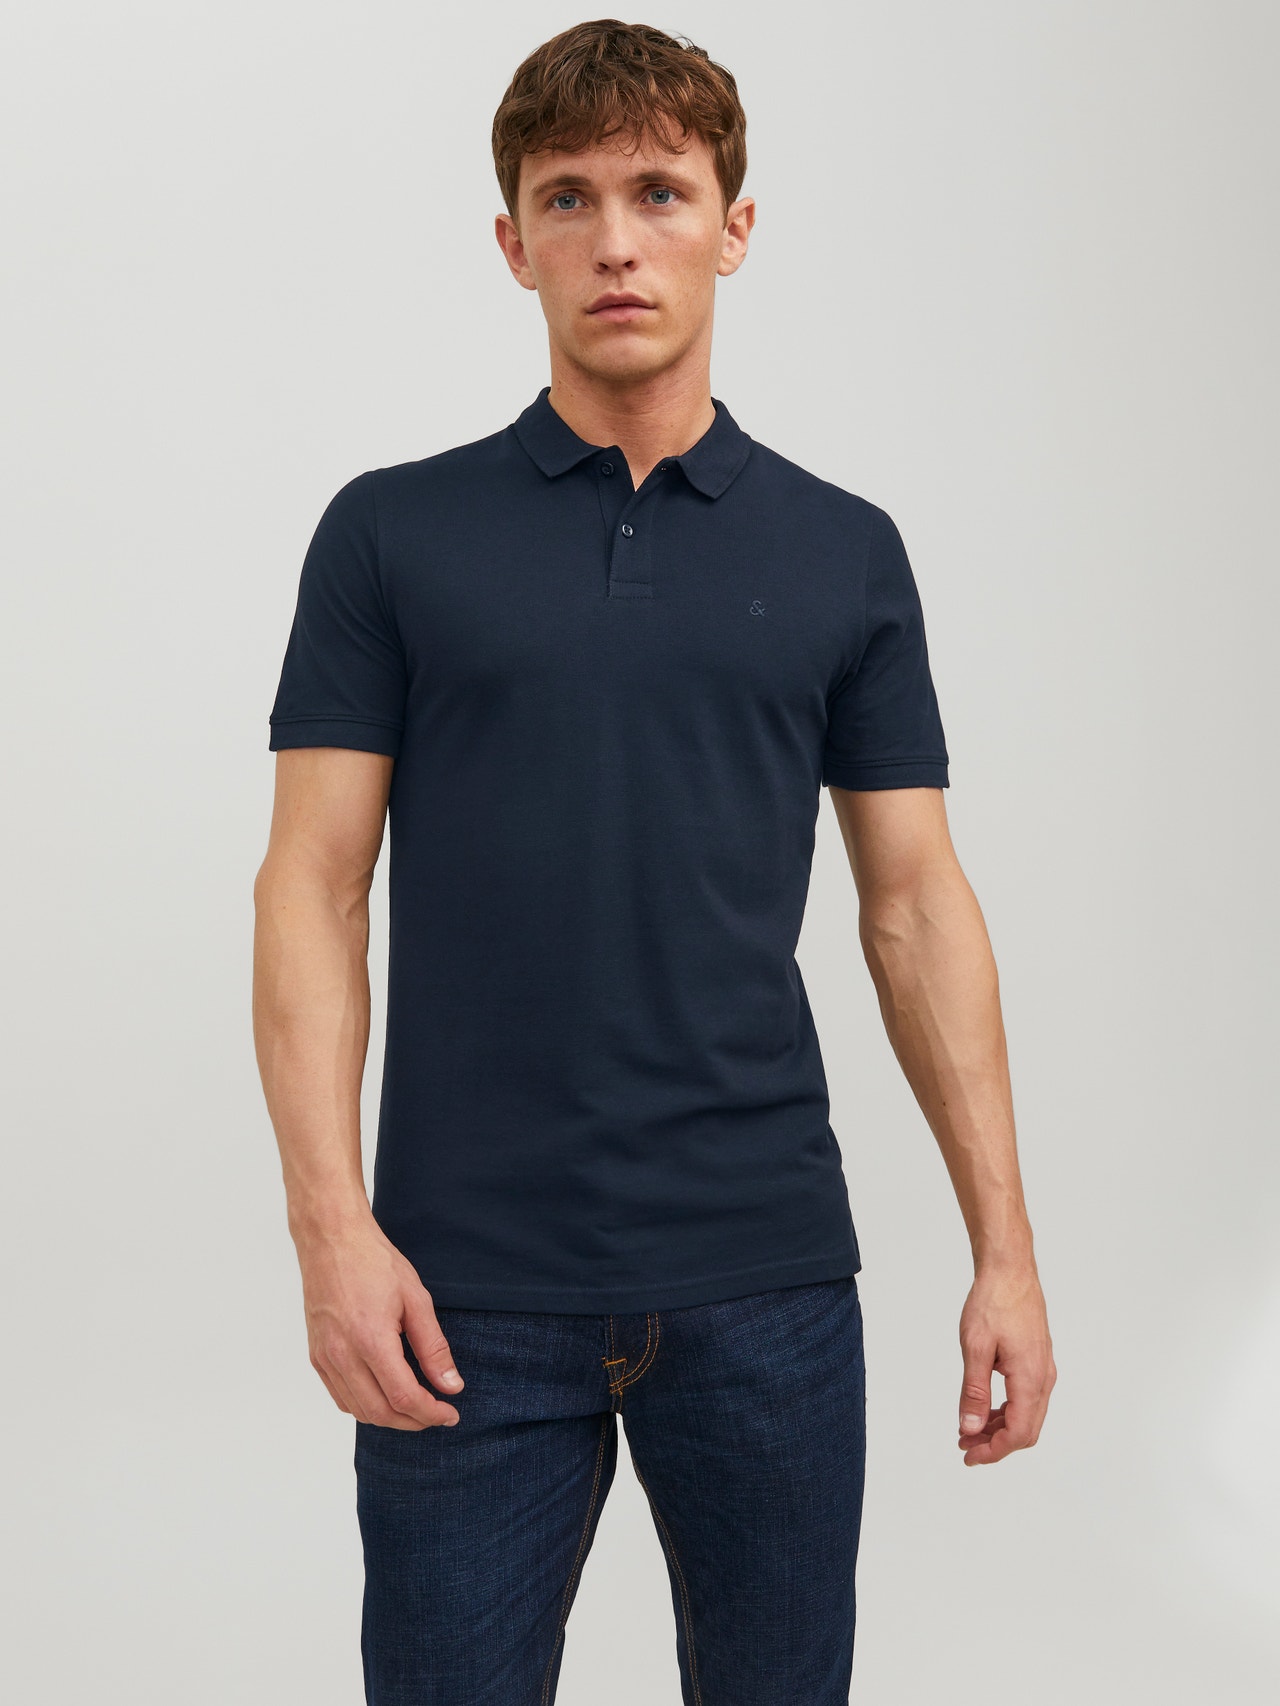 Jack & Jones T-shirt Liso Polo -Navy Blazer - 12136516